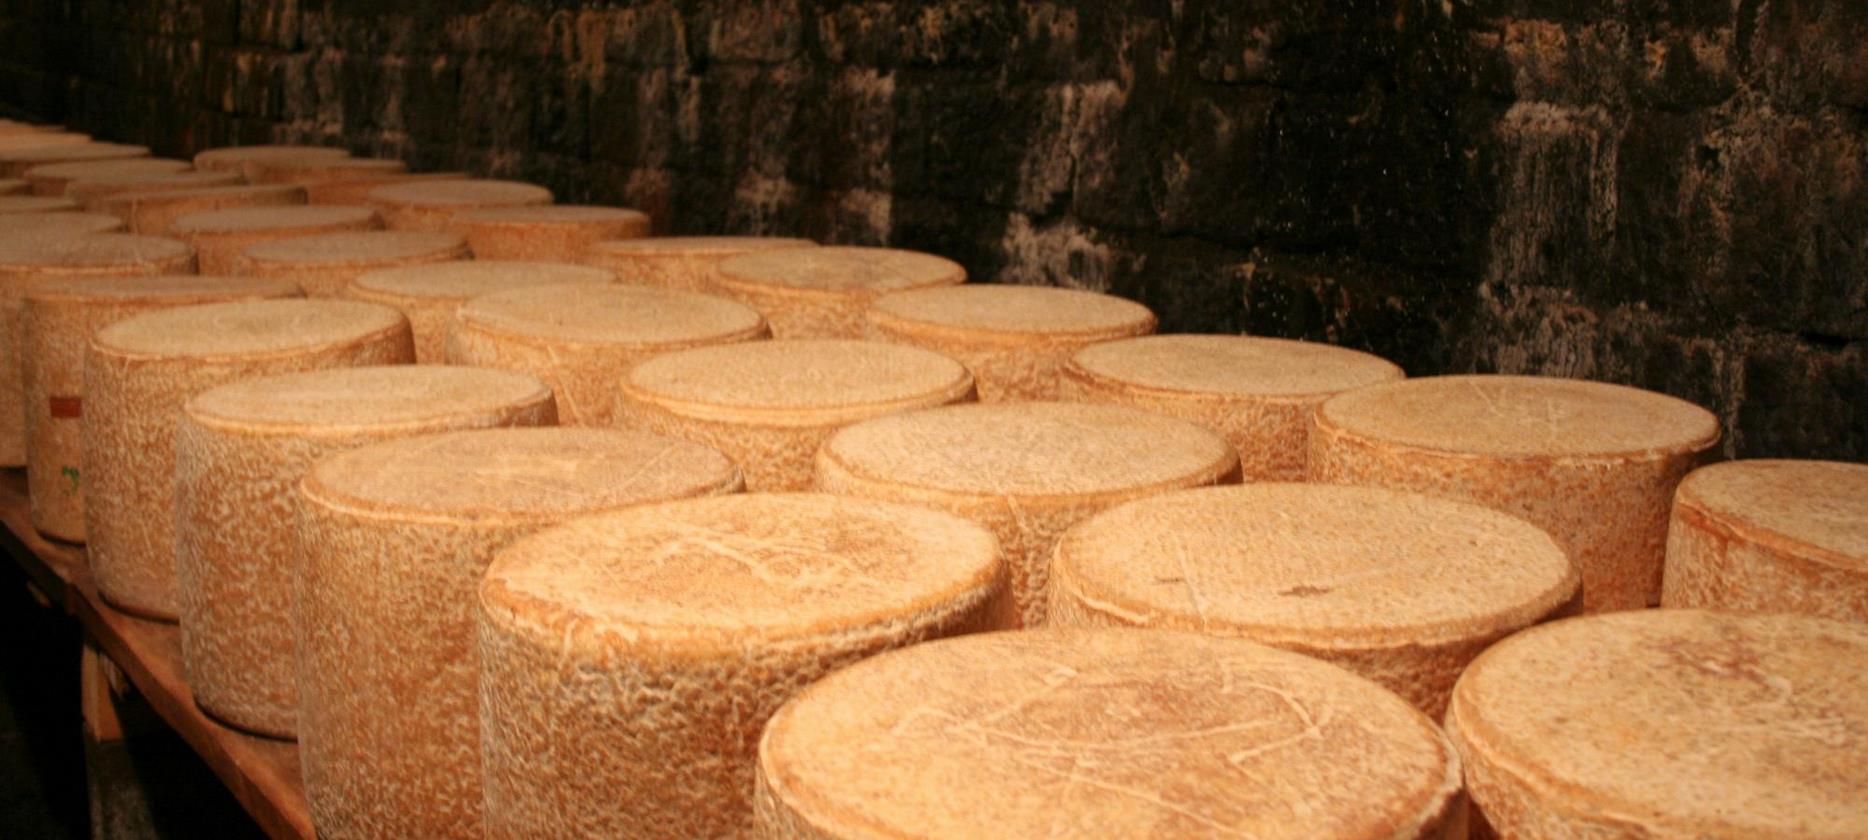 Le Cantal - AOC Auvergne cheese - Aging cellar